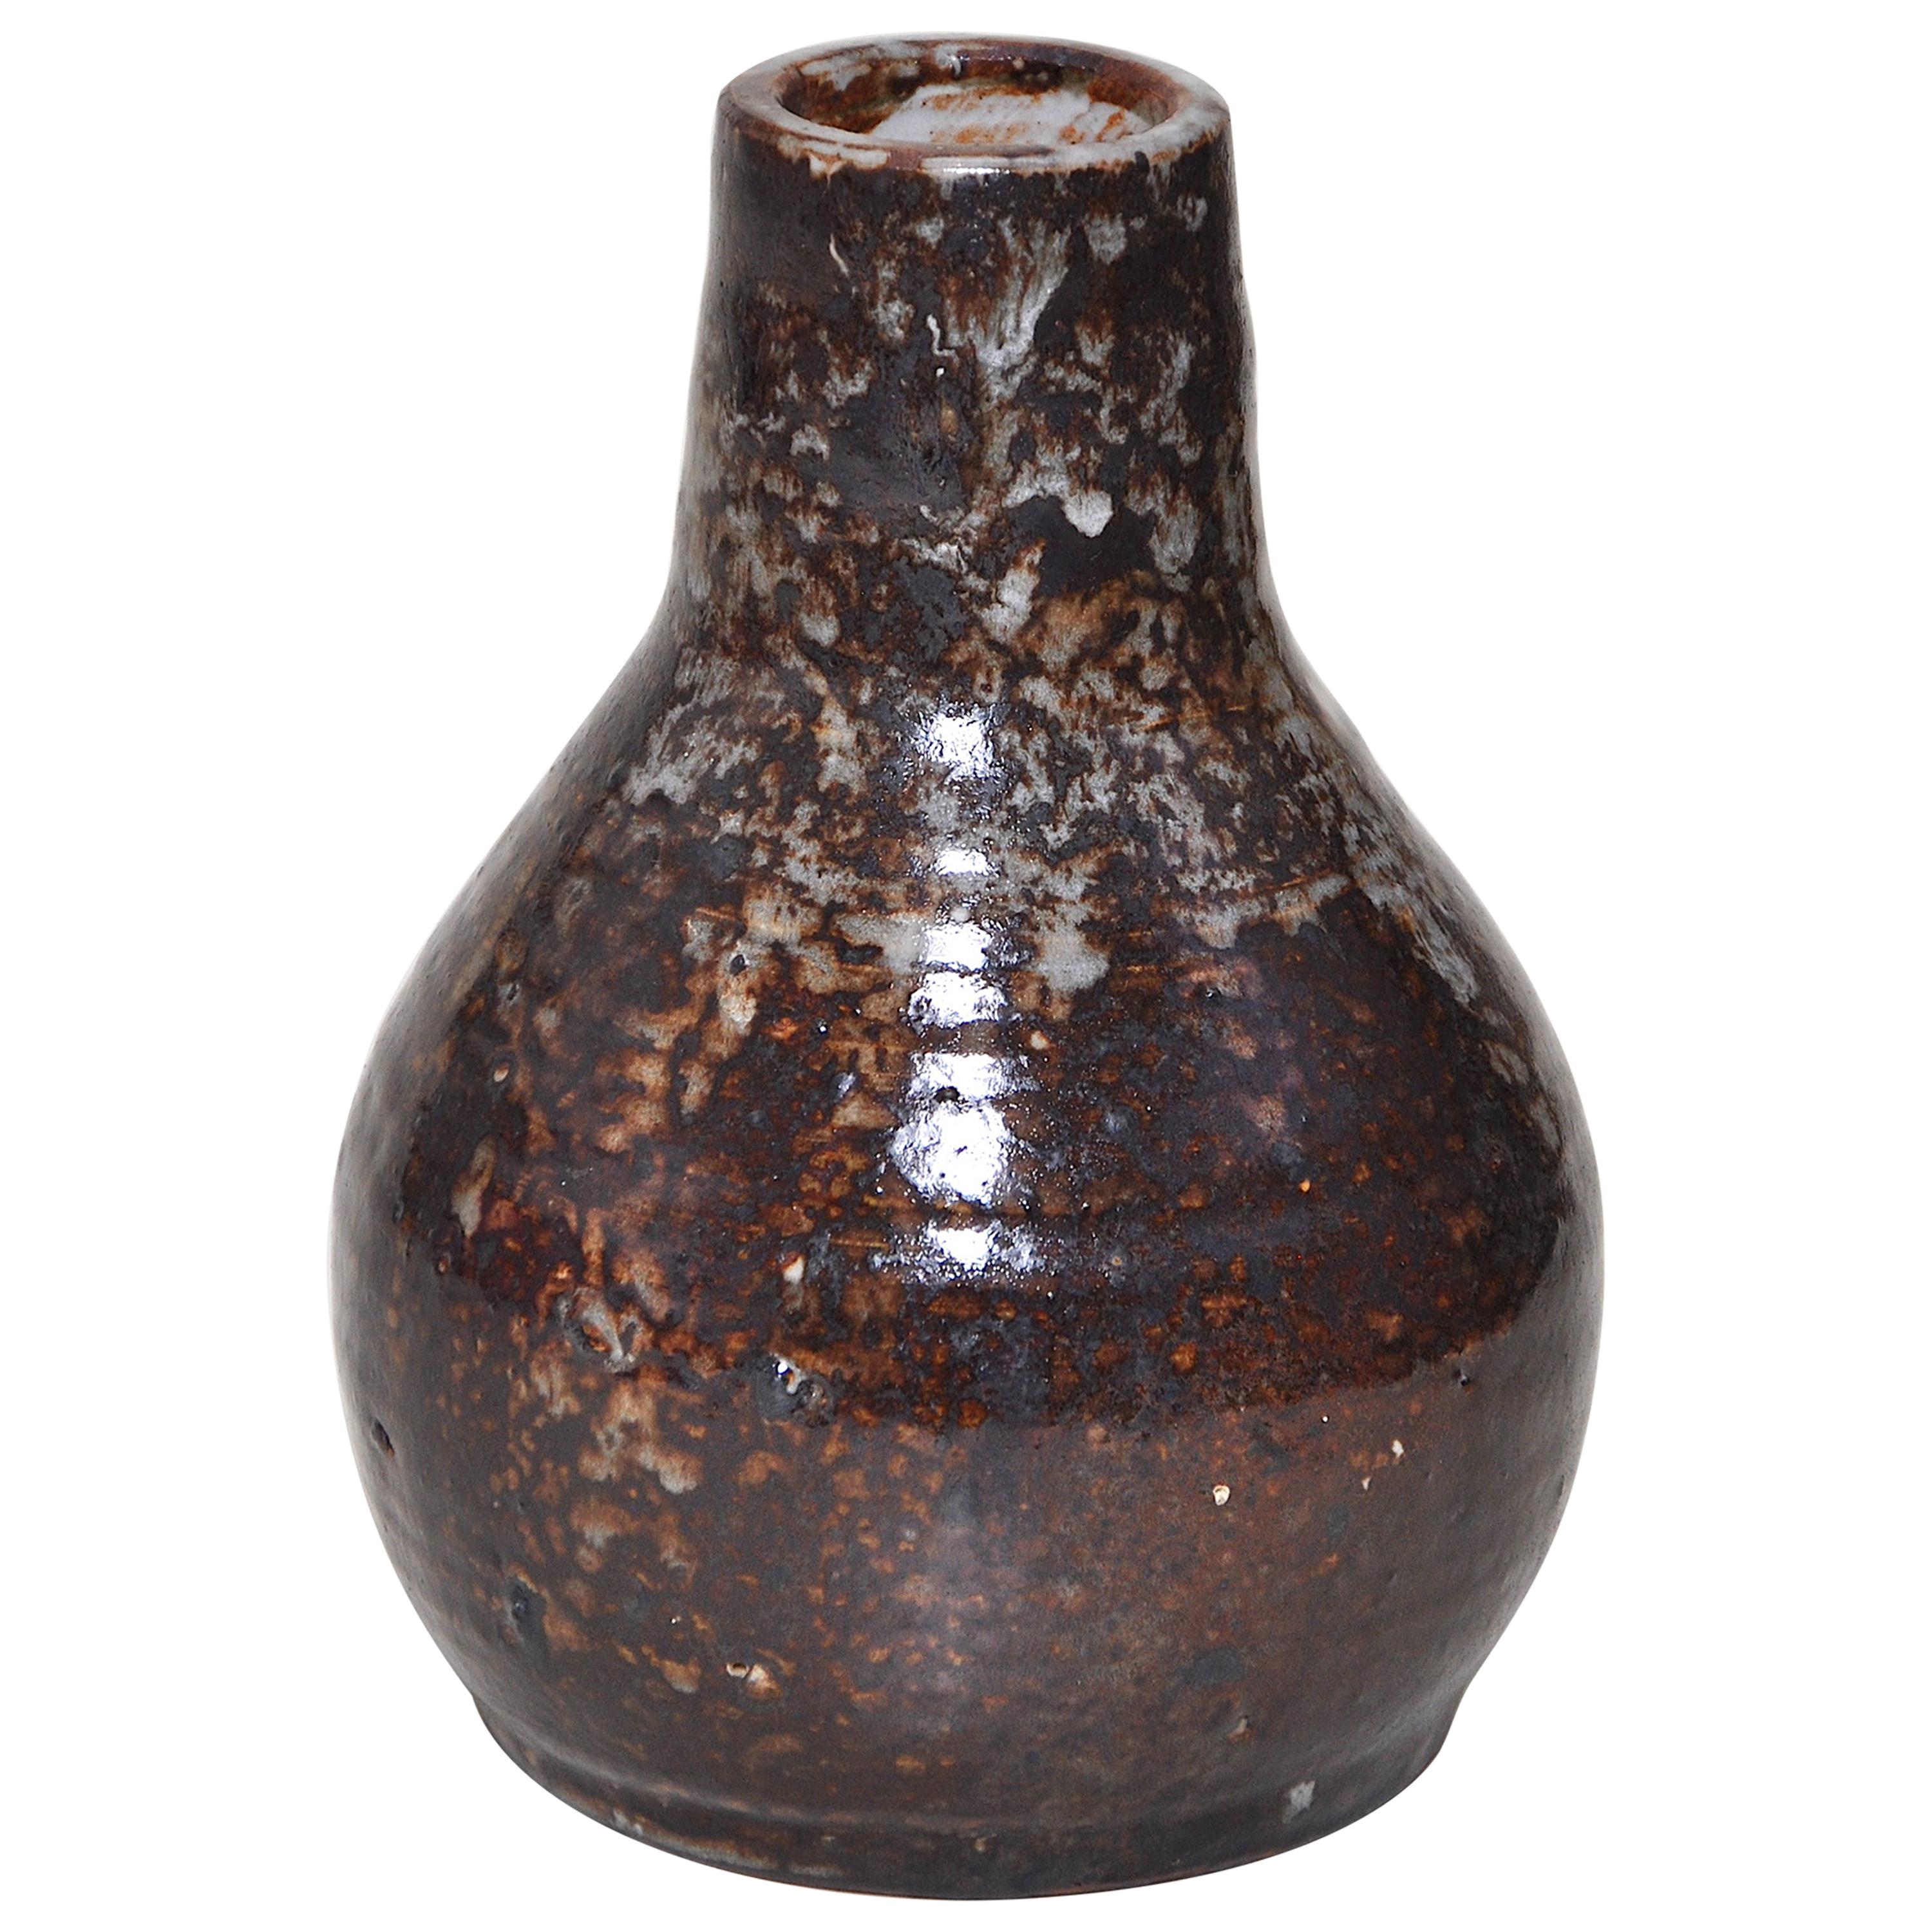 Rare French Art Nouveau Brown Speckled Japonist Vase by Leon For Sale